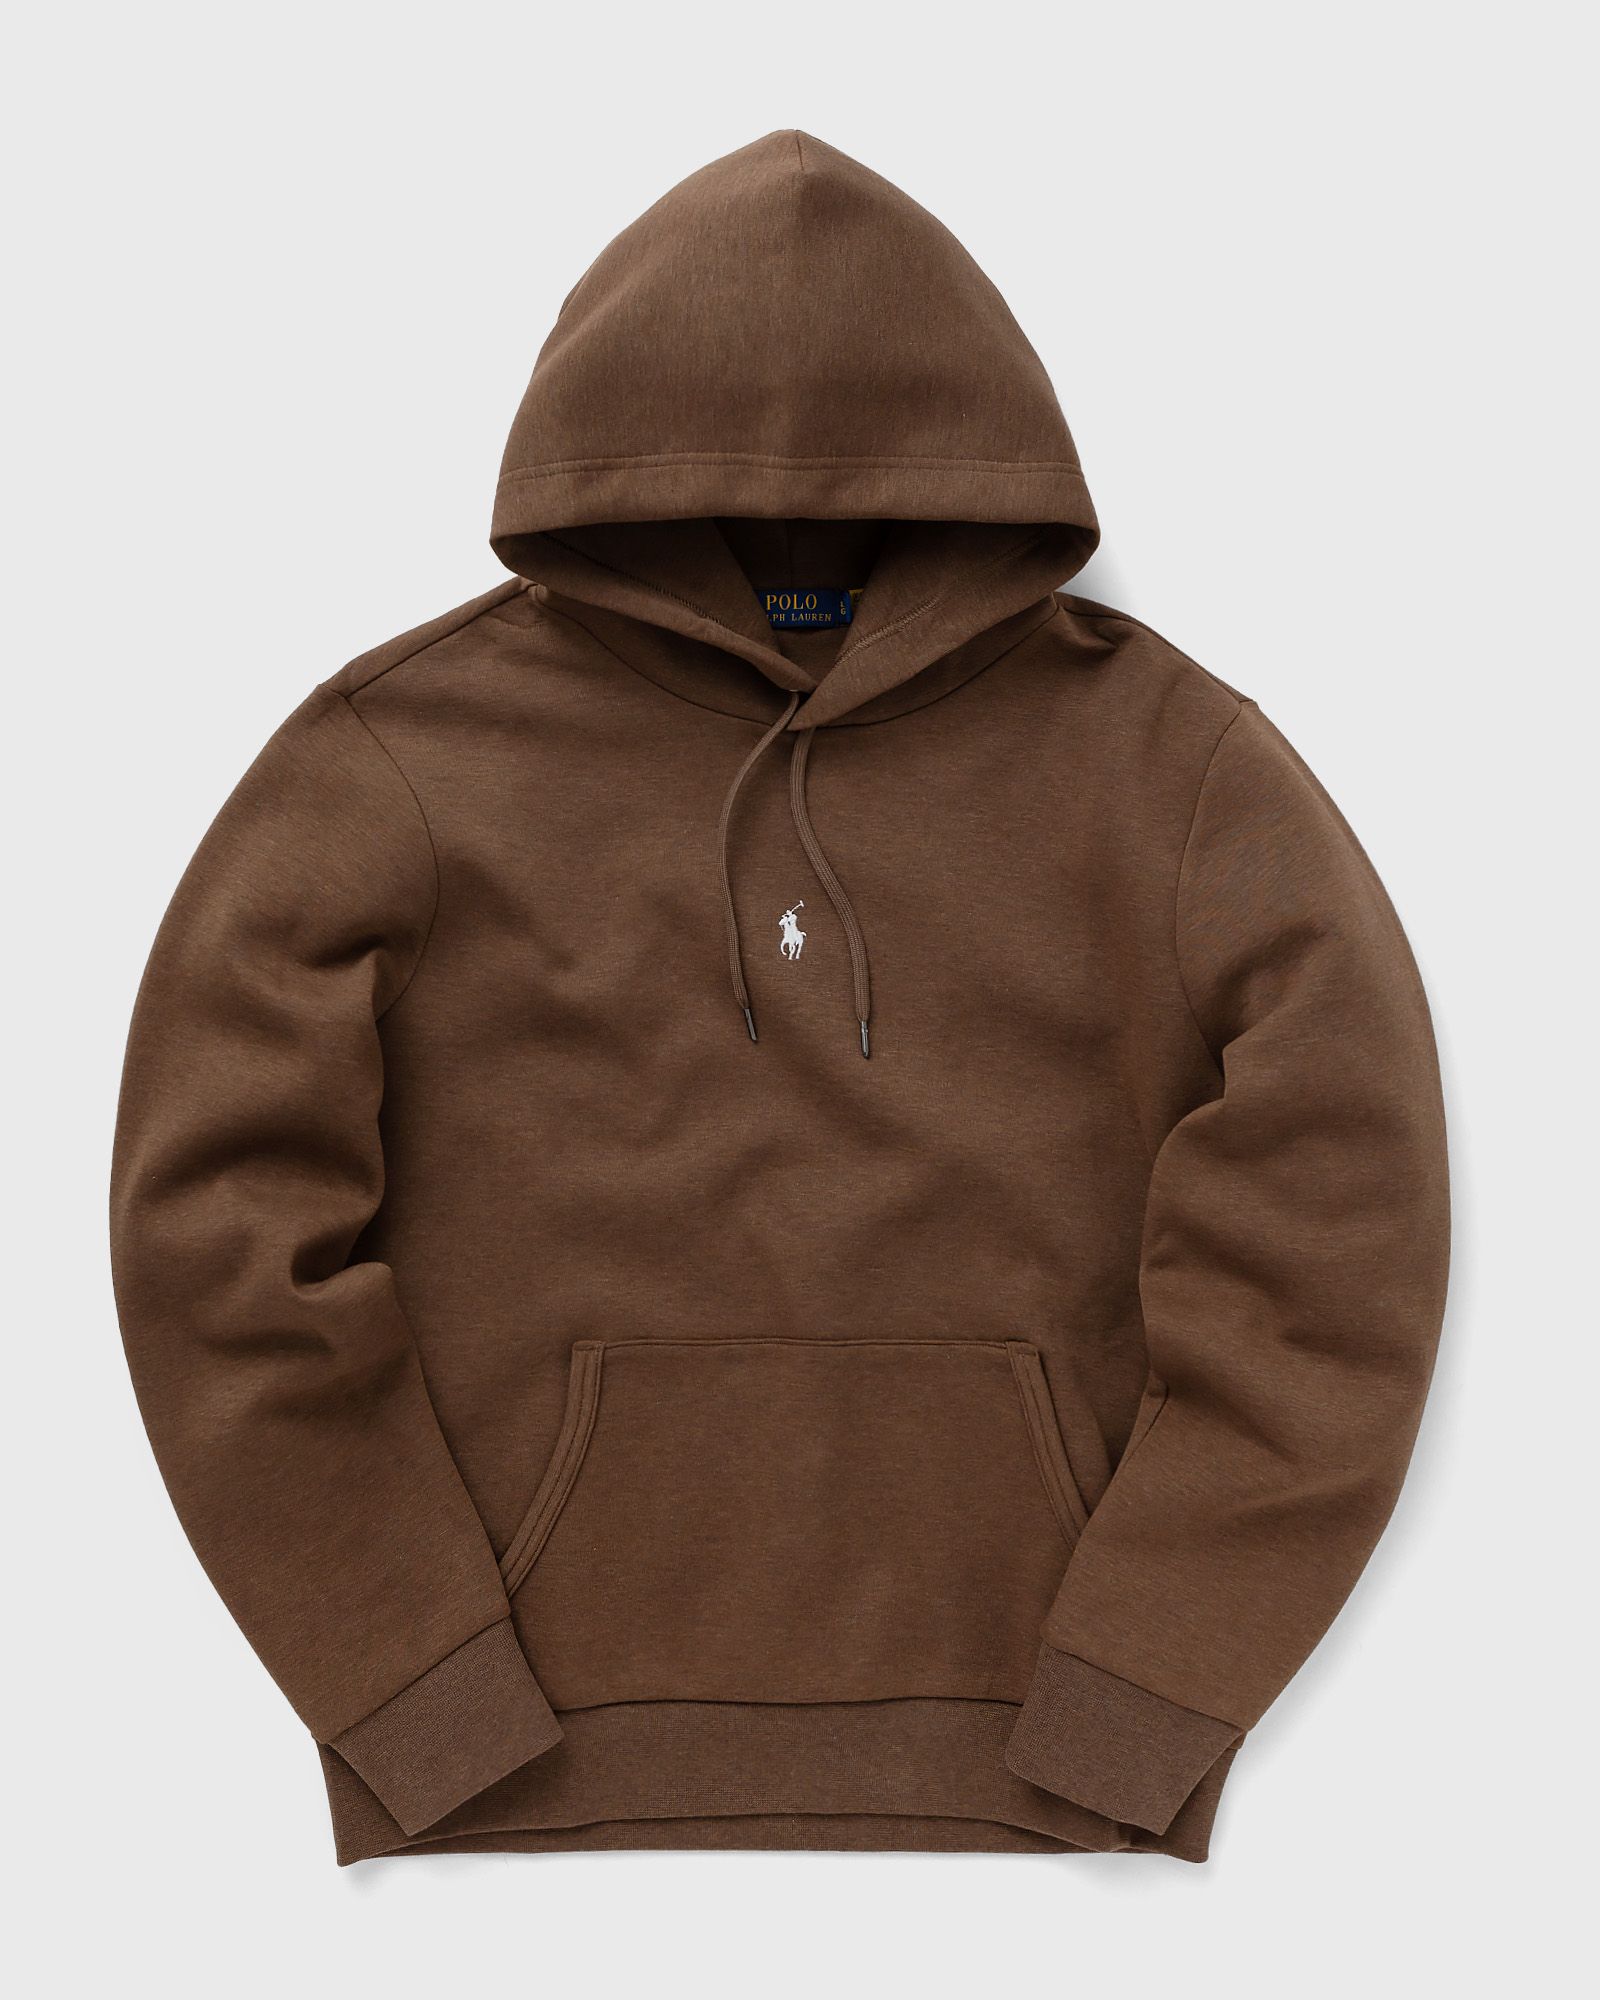 Polo Ralph Lauren - long sleeve-sweatshirt men hoodies brown in größe:xl